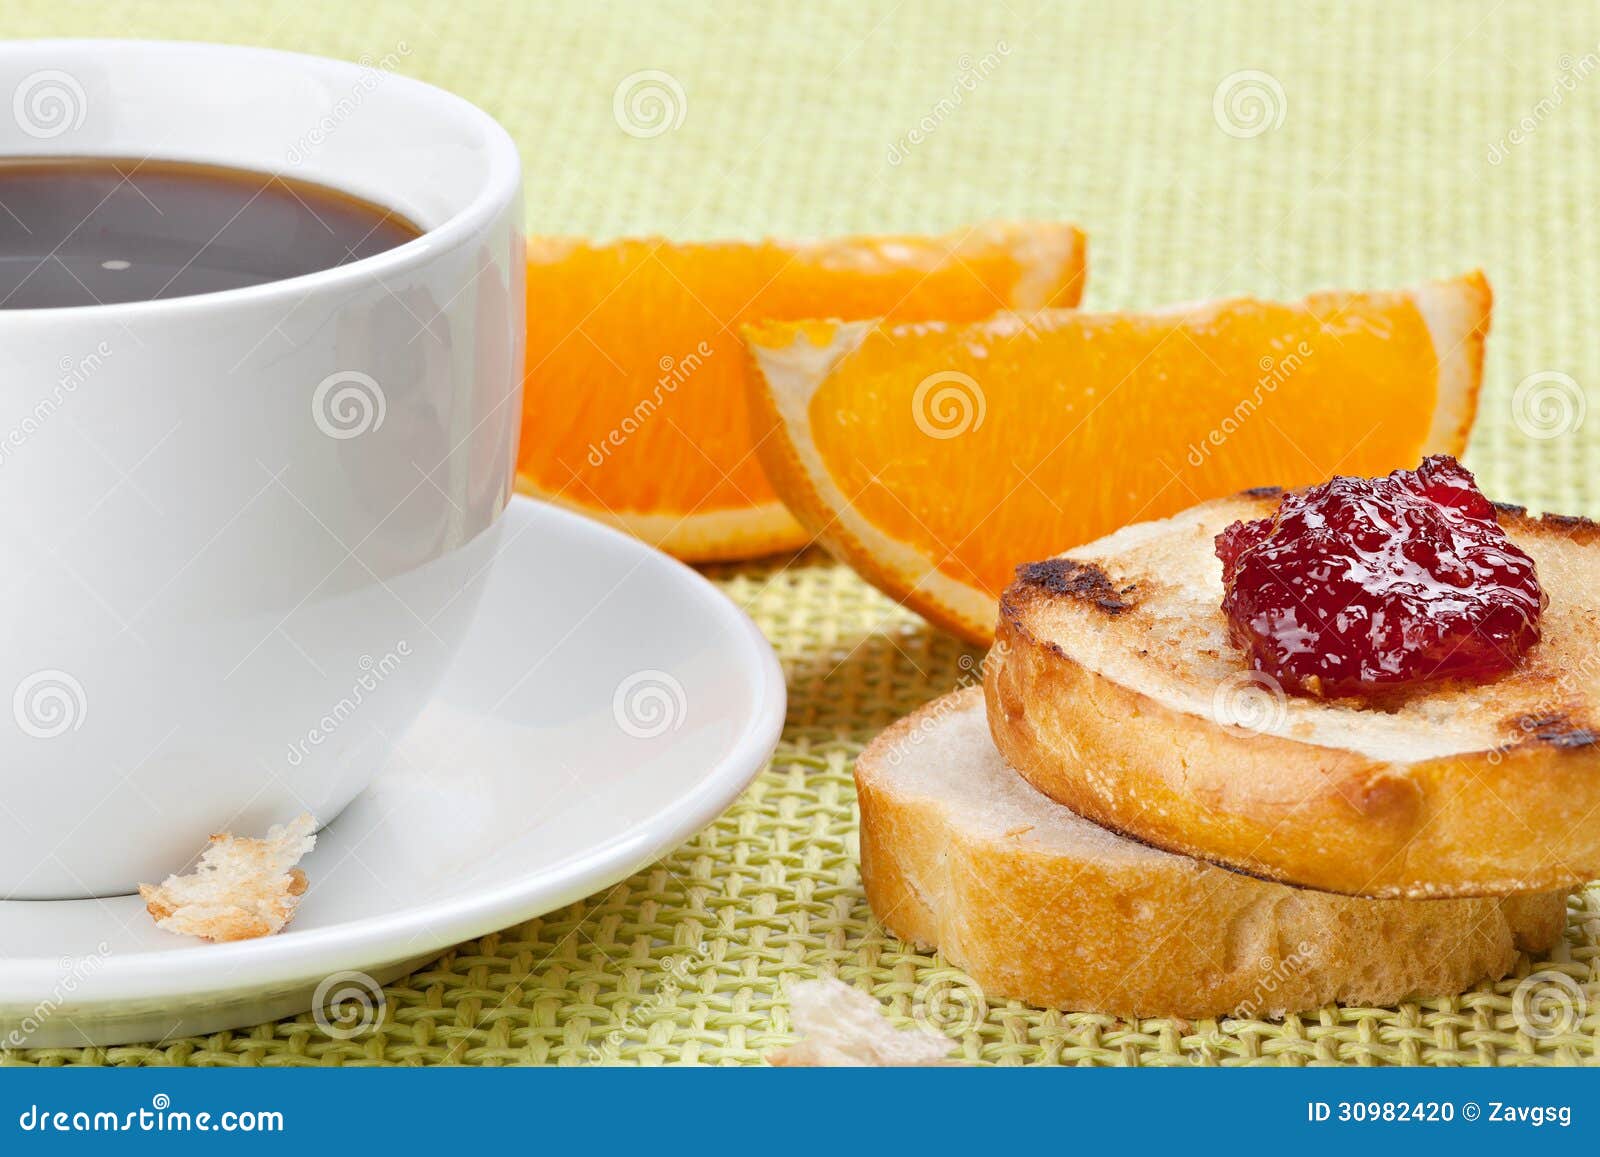 Ontbijt met koffie, toost, kersenjam en sinaasappel. Ontbijt met koffie, toost, kersenjam en oranje segment